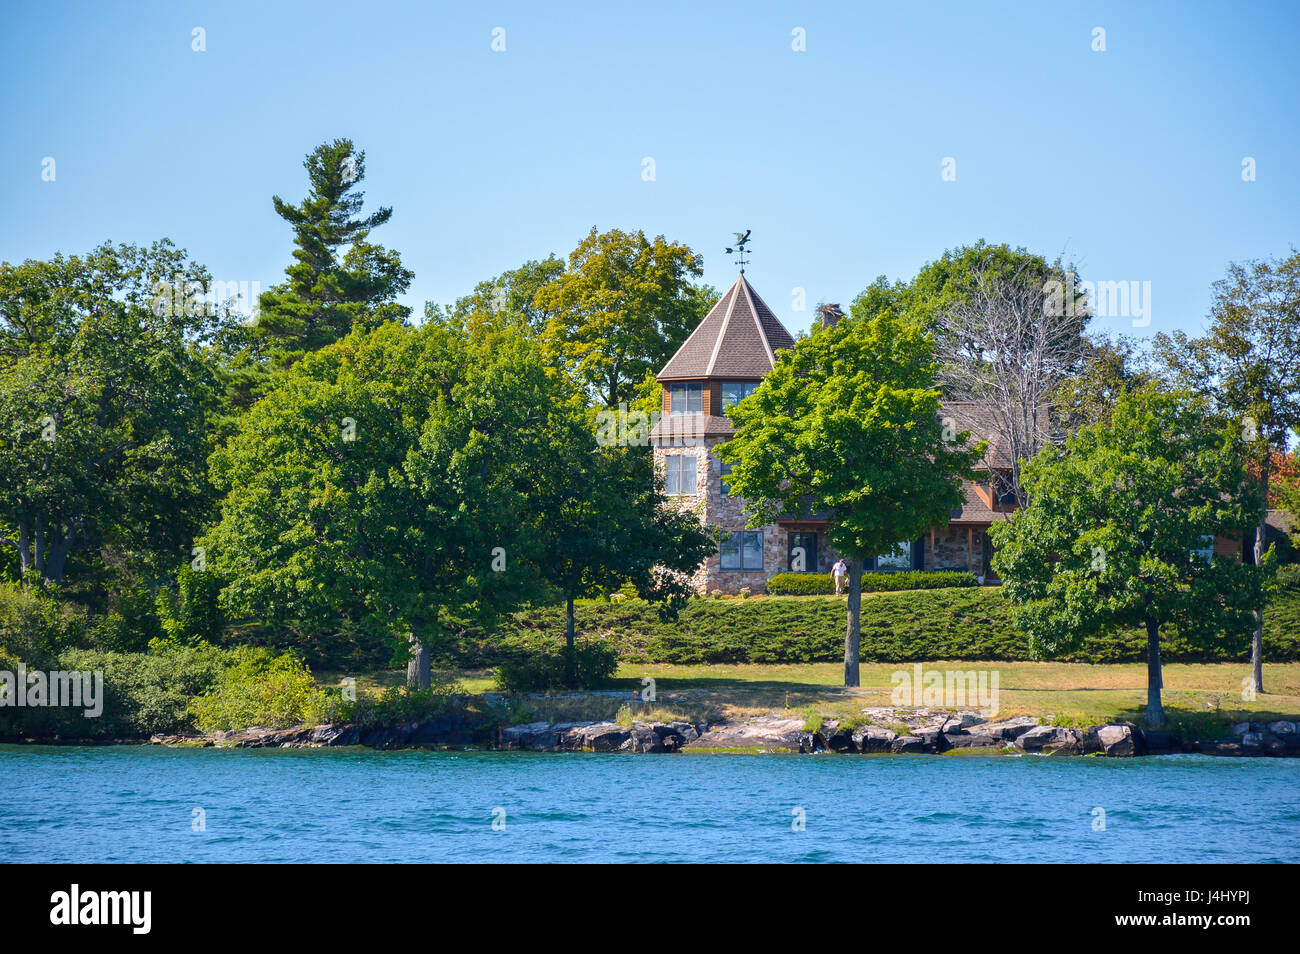 Kingston, Kanada - 3. September 2016: Altes Haus in 1000 Inseln und Kingston in Ontario, Kanada Stockfoto